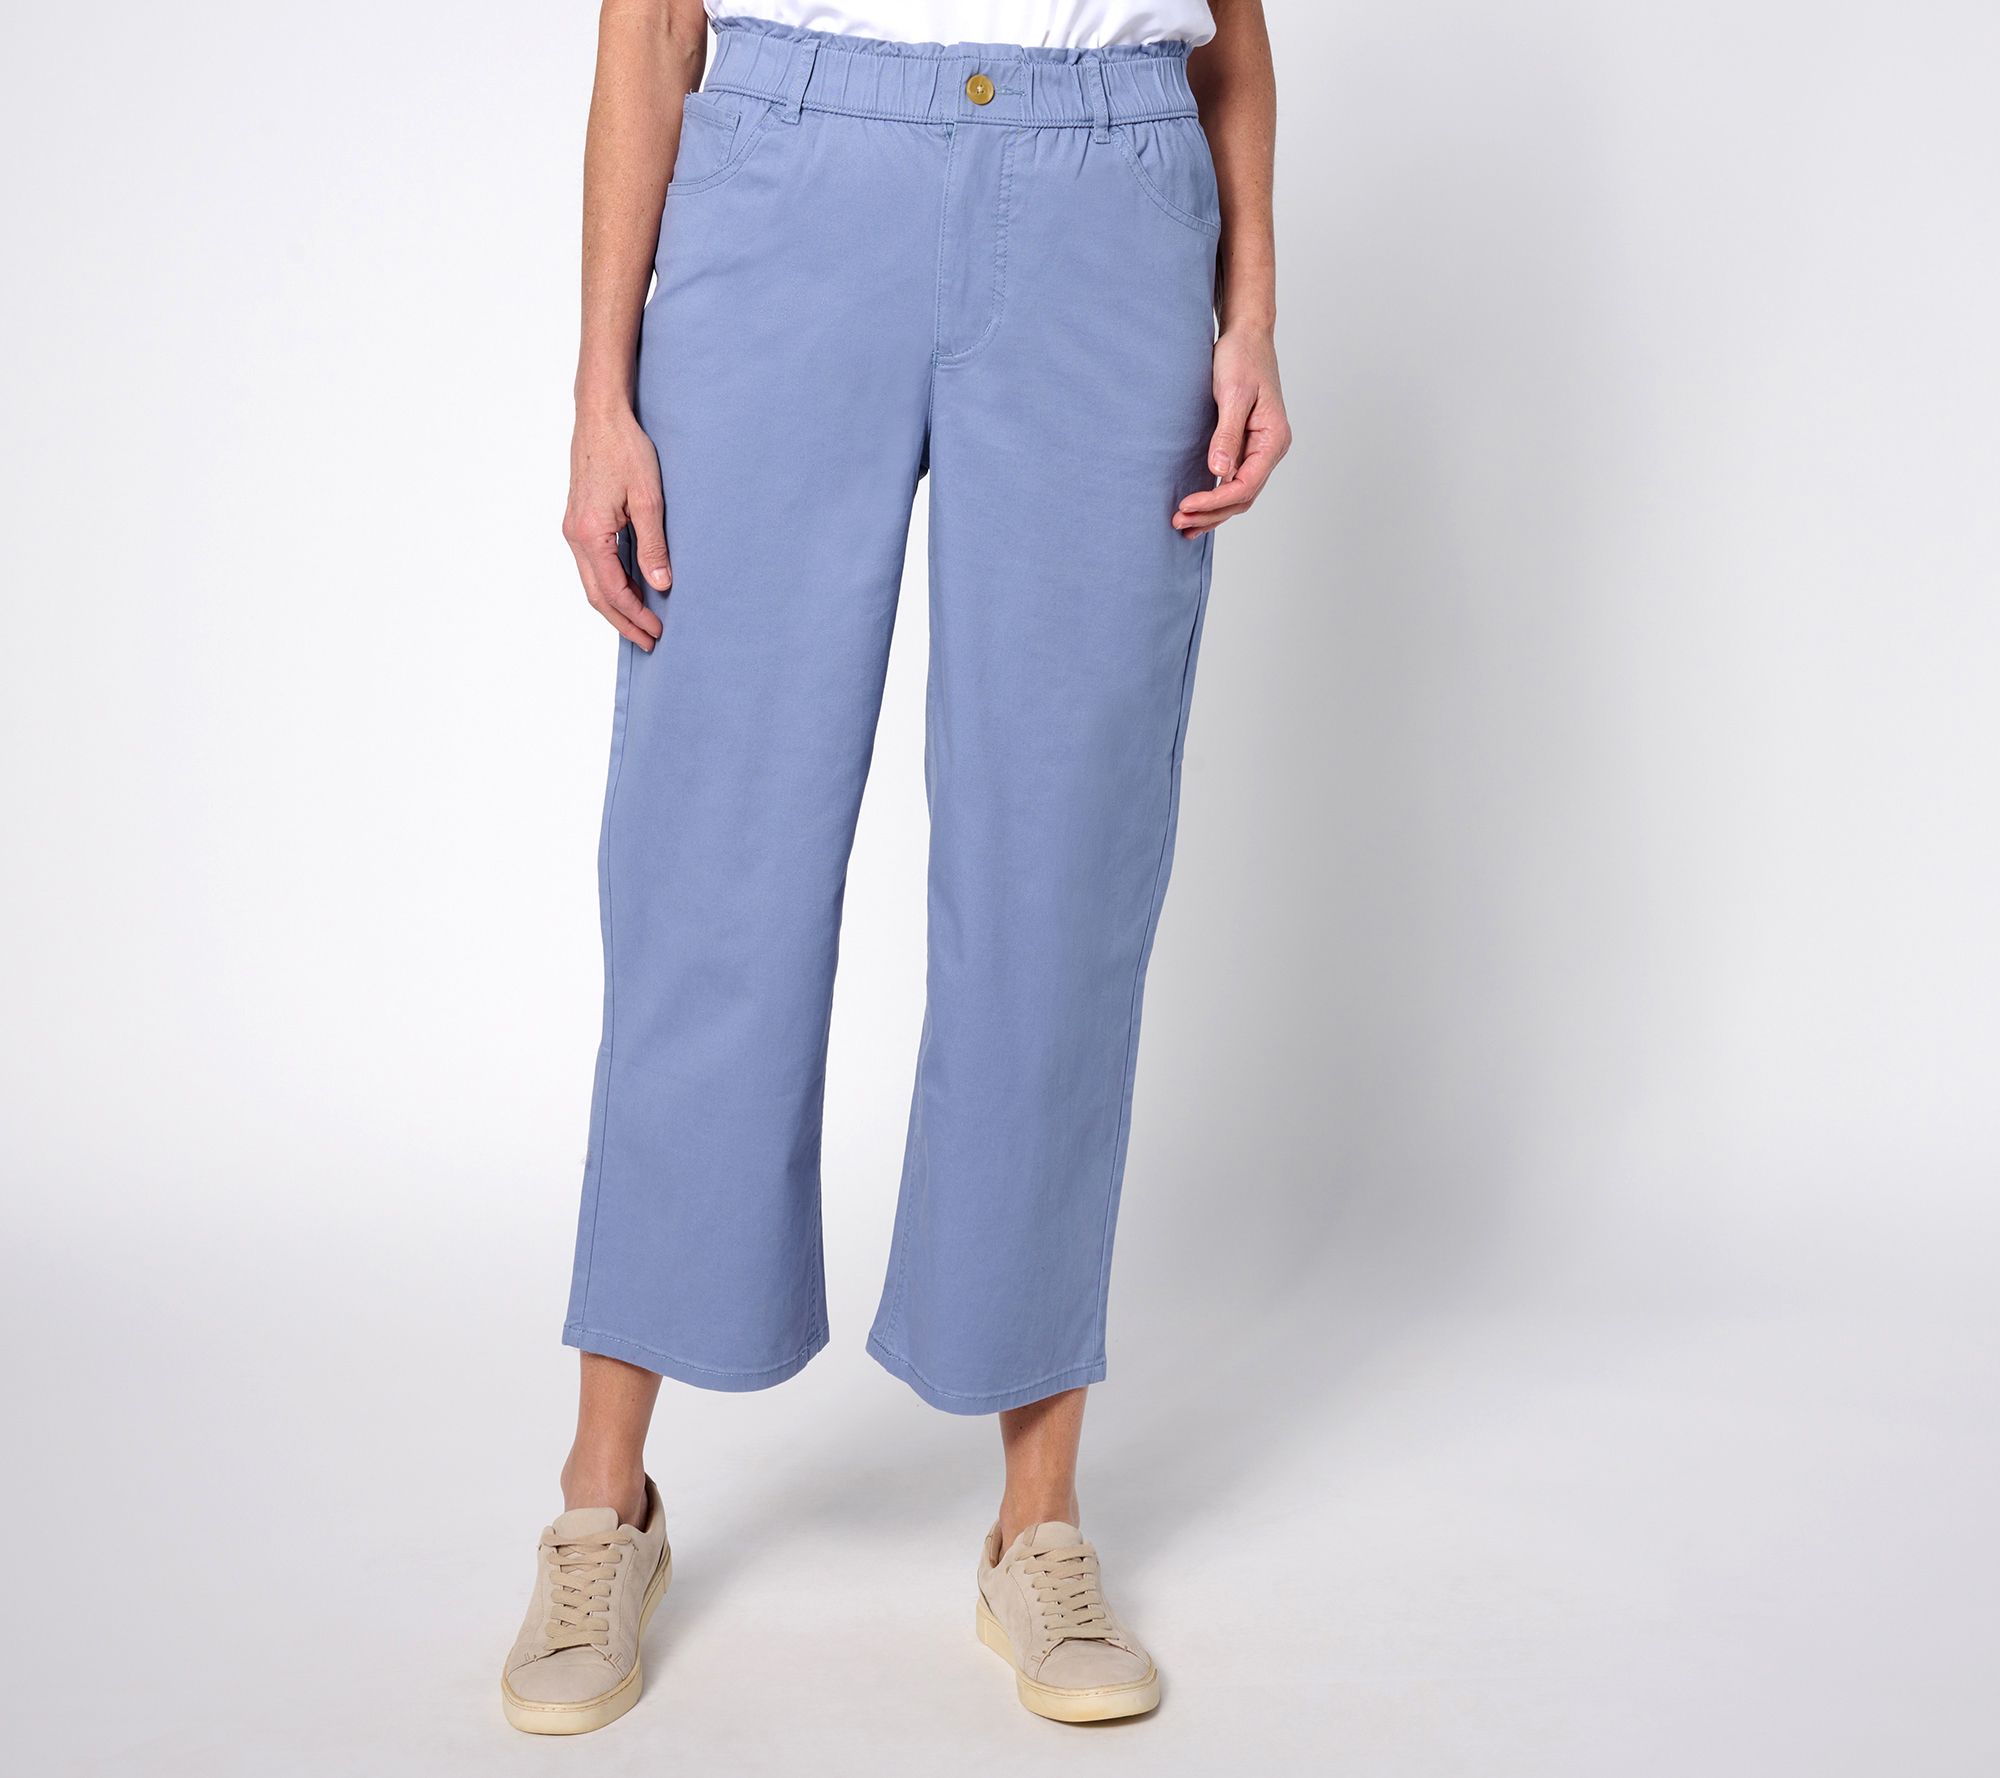 Denim & Co. Comfy Knit Air Straight Crop Pants w/ Slits on QVC 